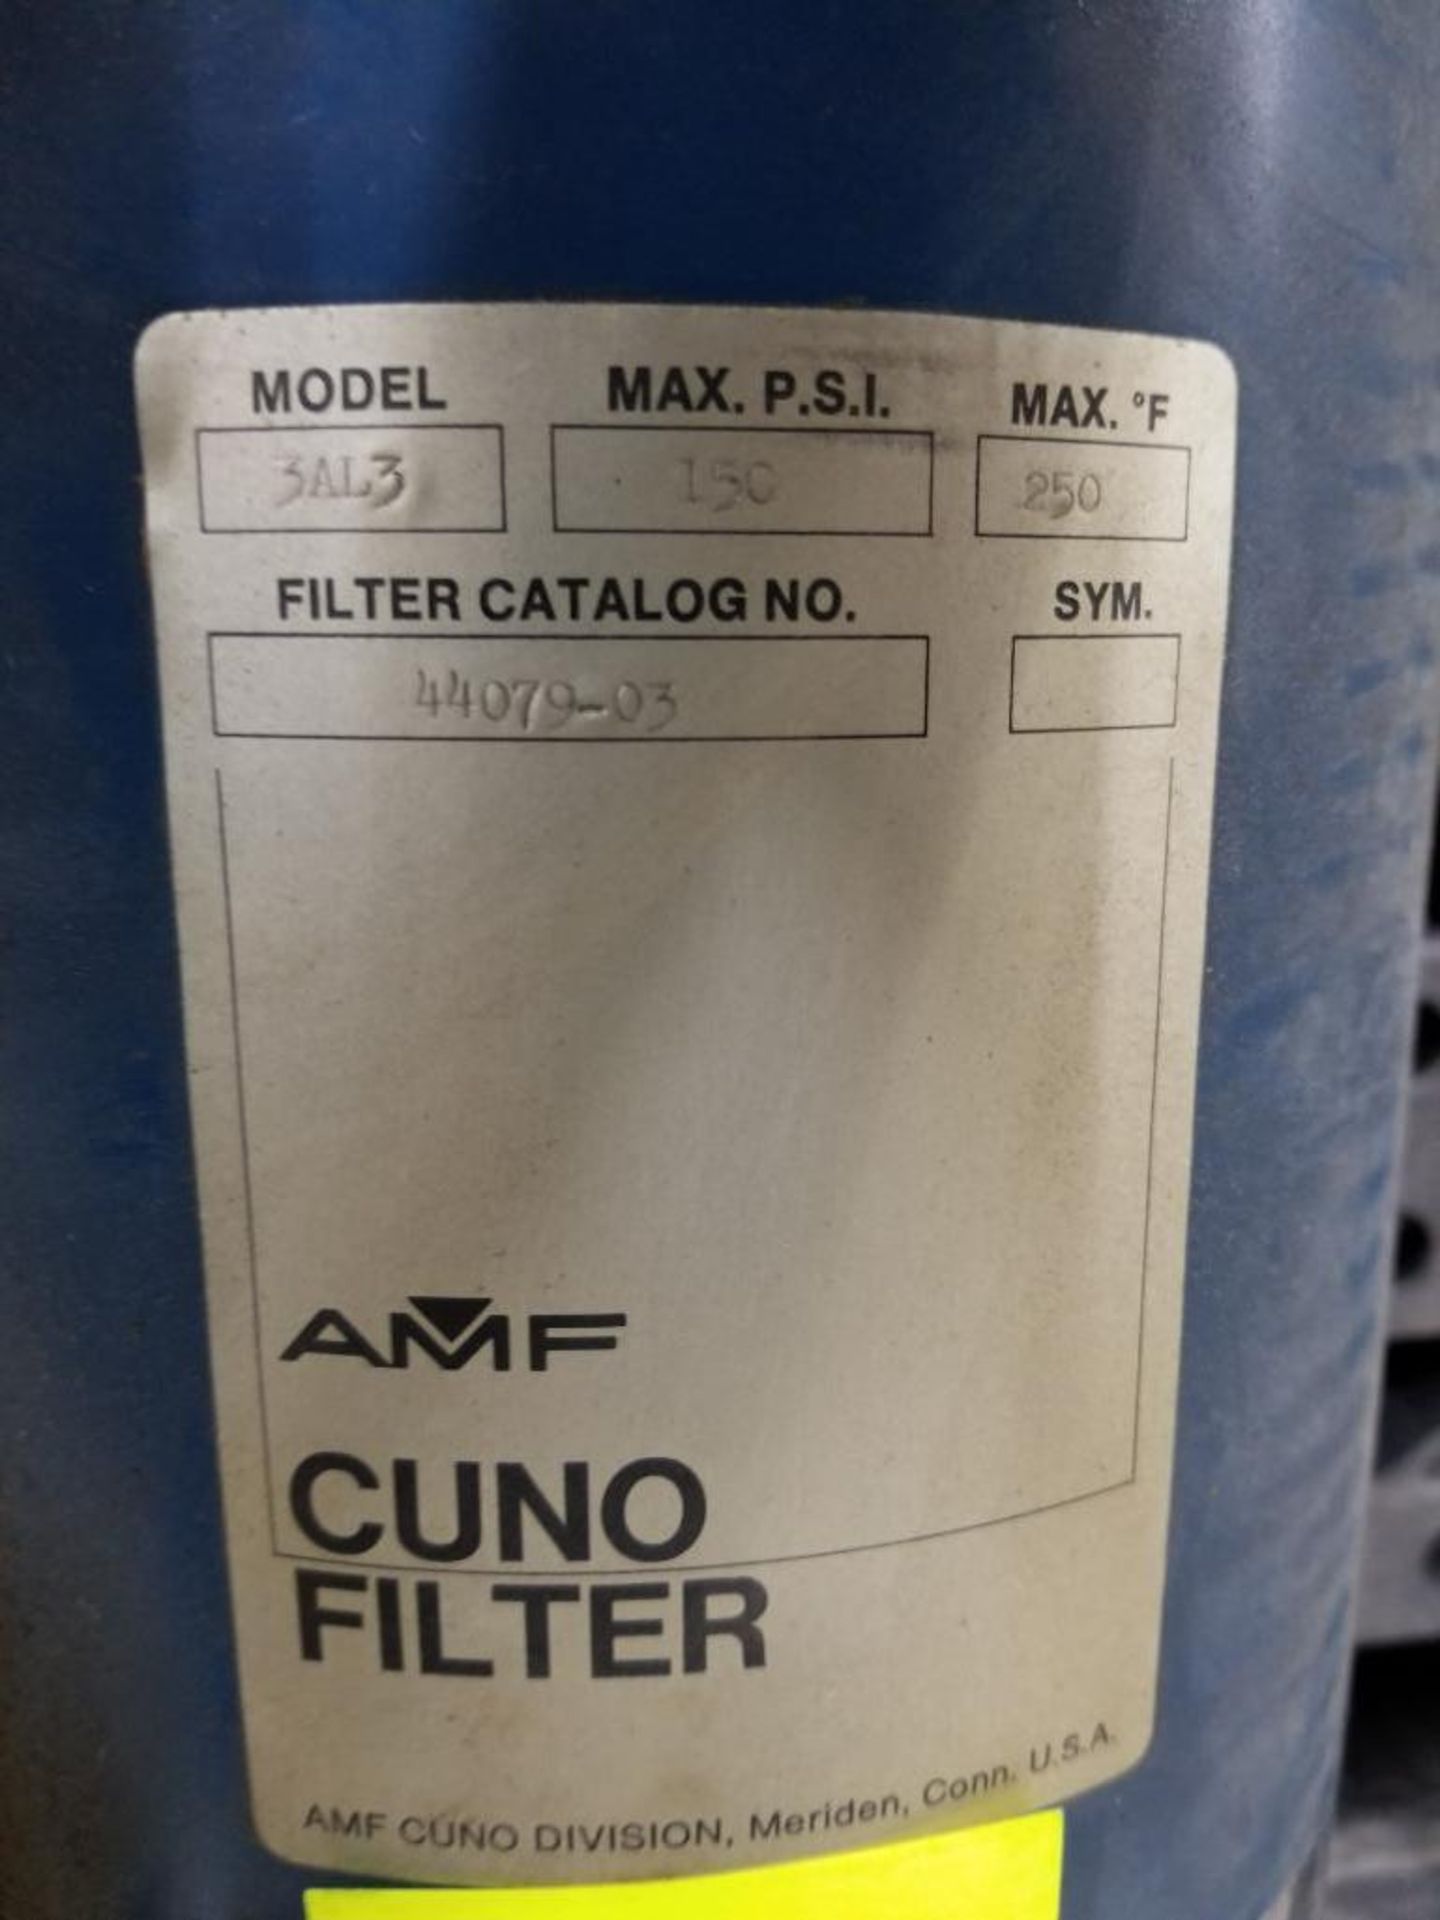 AMF Cuno filter unit. Model 3AL3. - Image 3 of 4